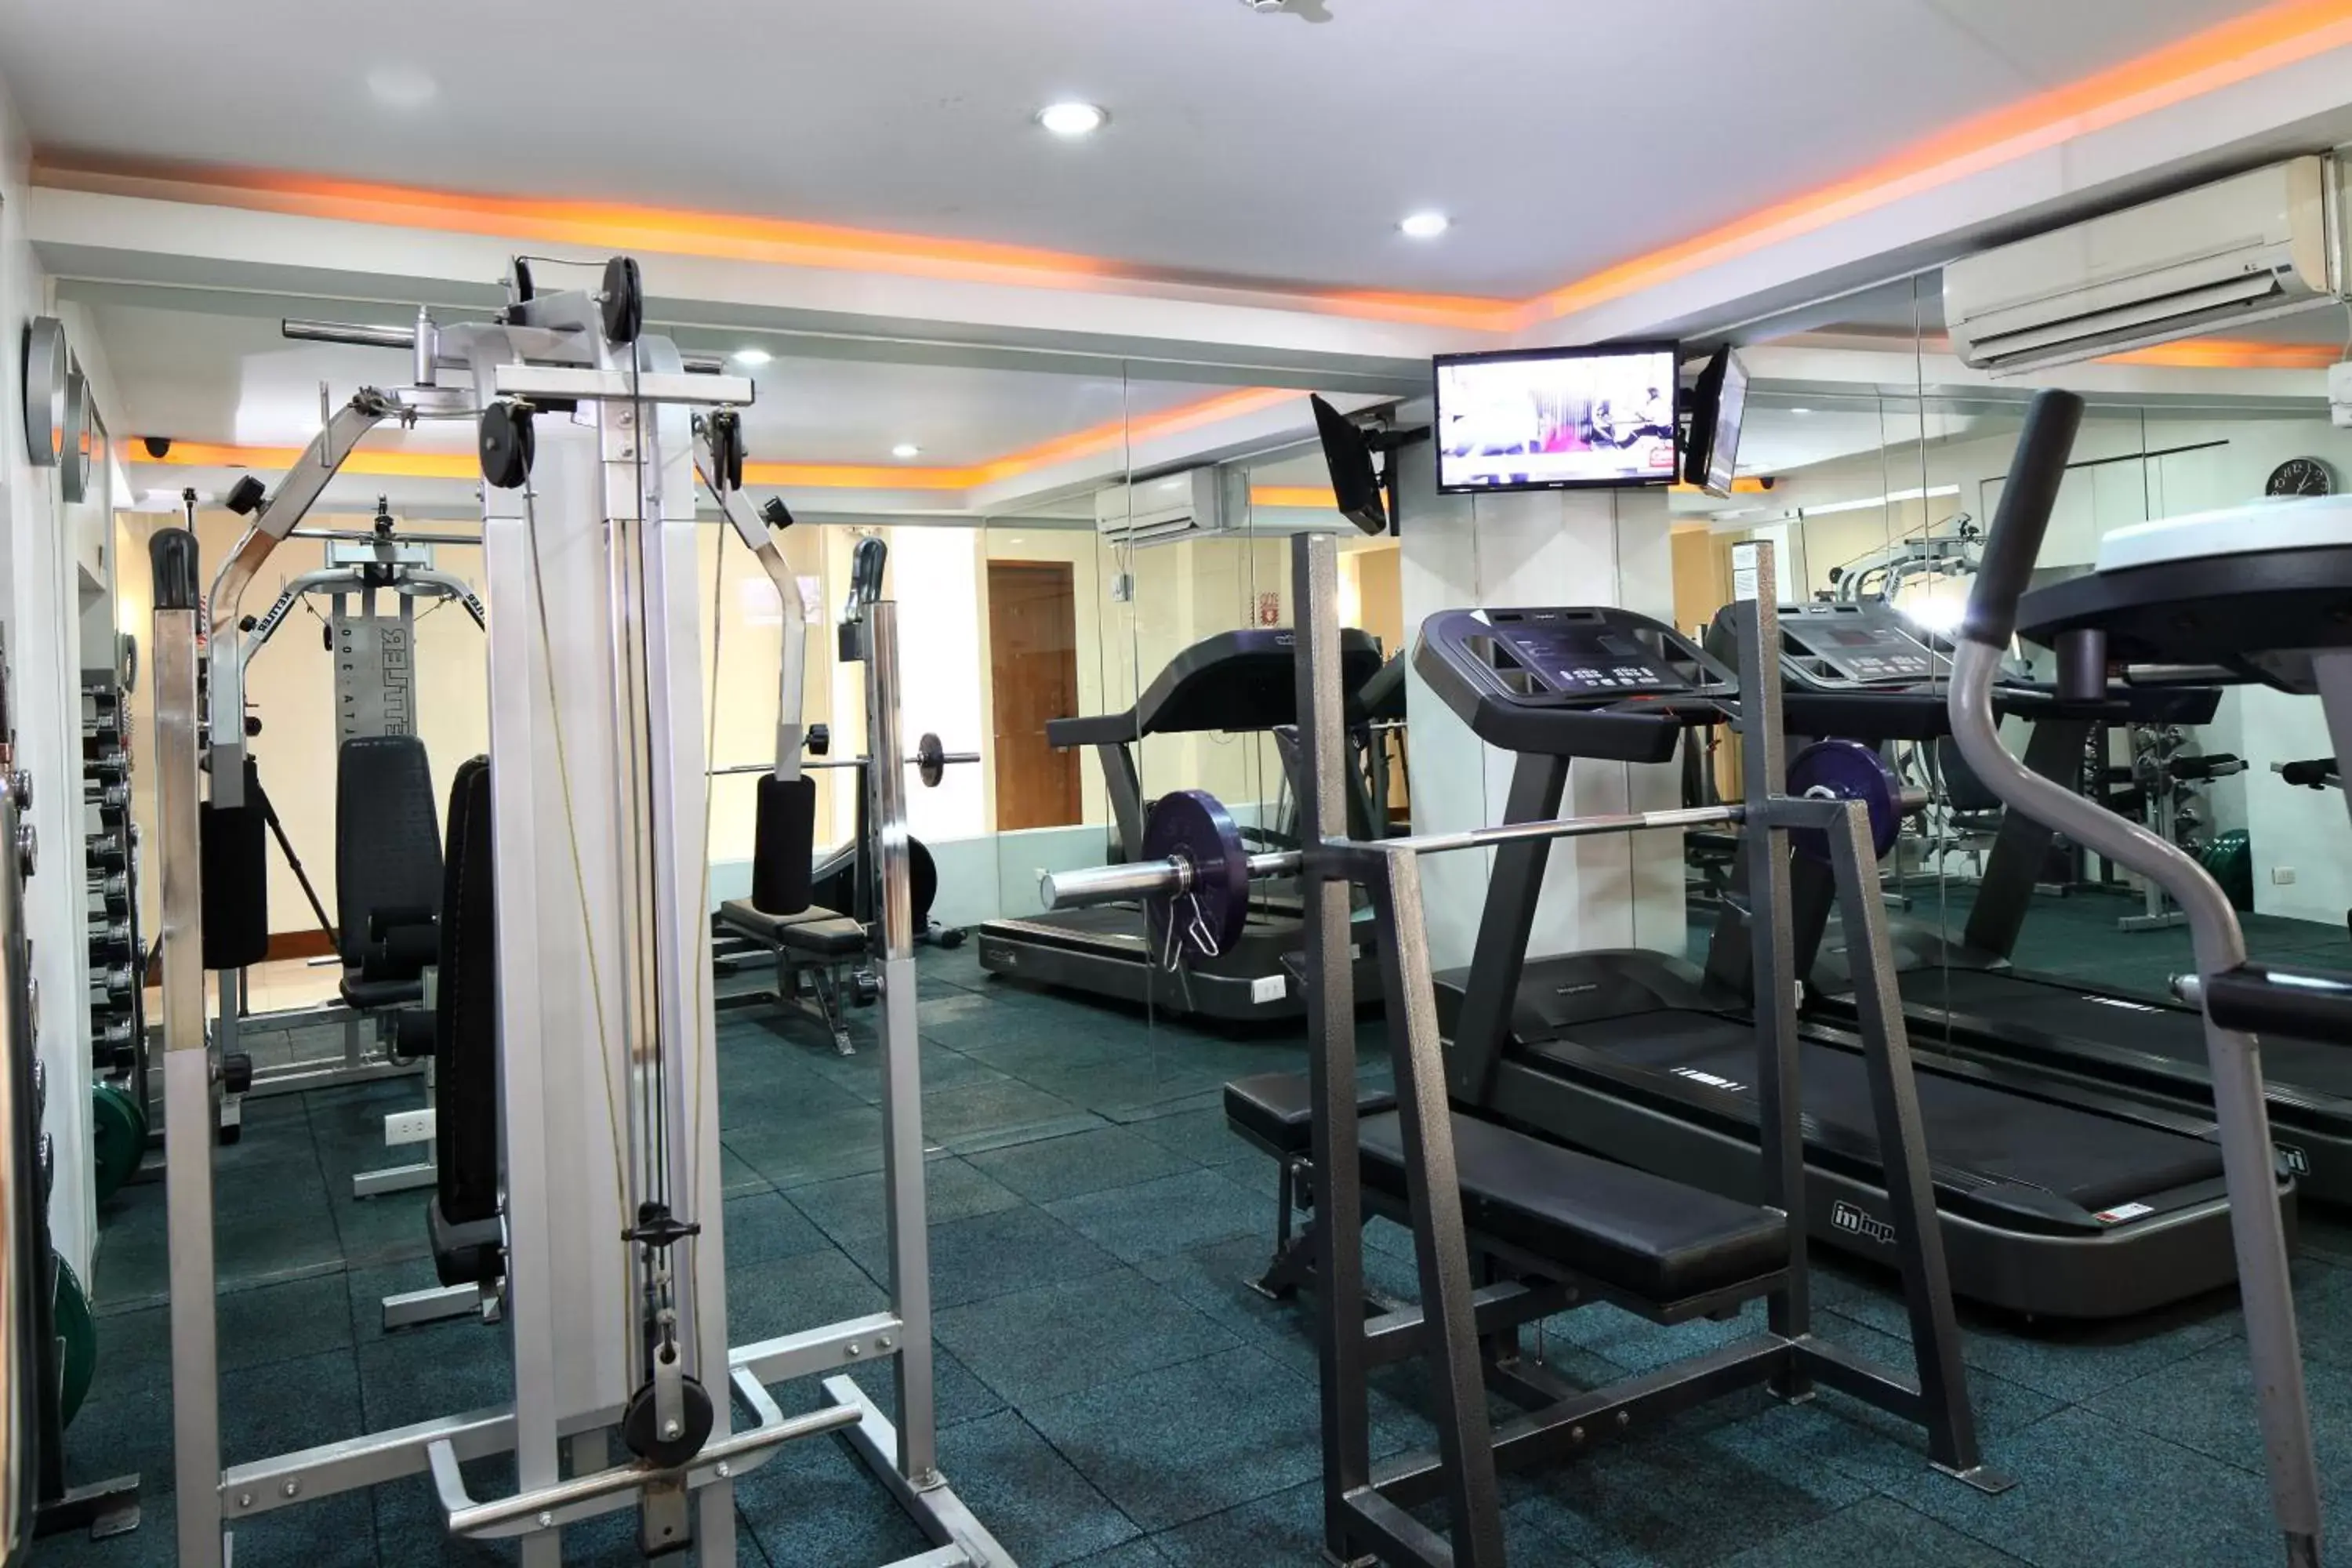 Fitness centre/facilities, Fitness Center/Facilities in Manila Lotus Hotel